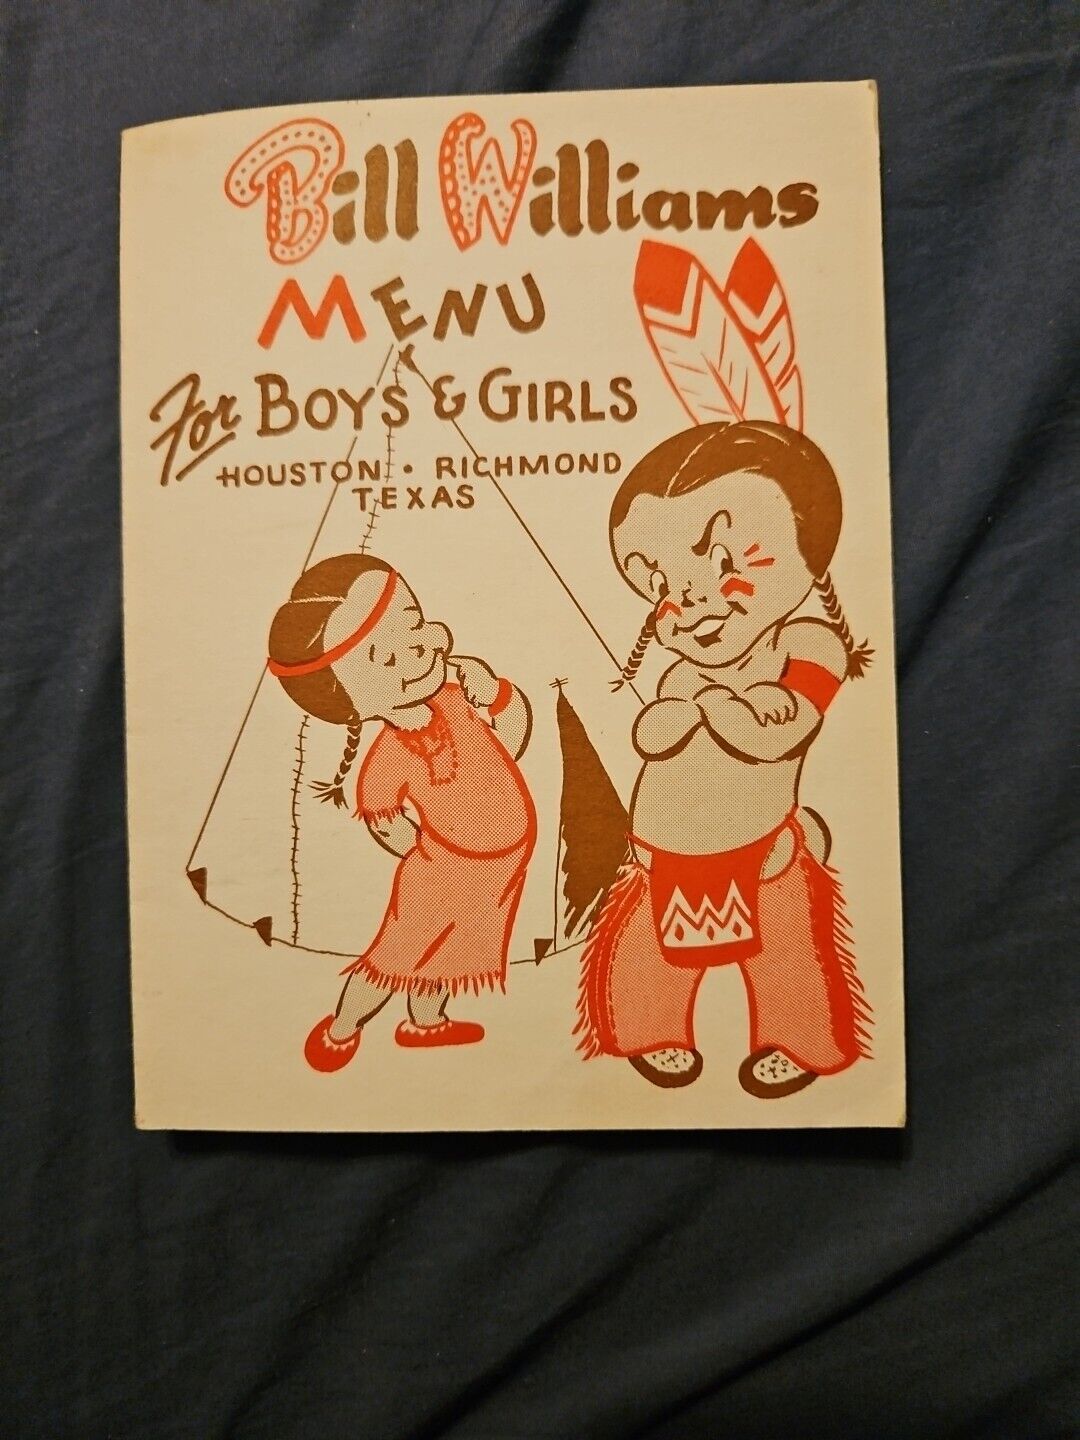 Vintage 1940's 1950's Bill williams menu Houston richmond texas. For boys girls.